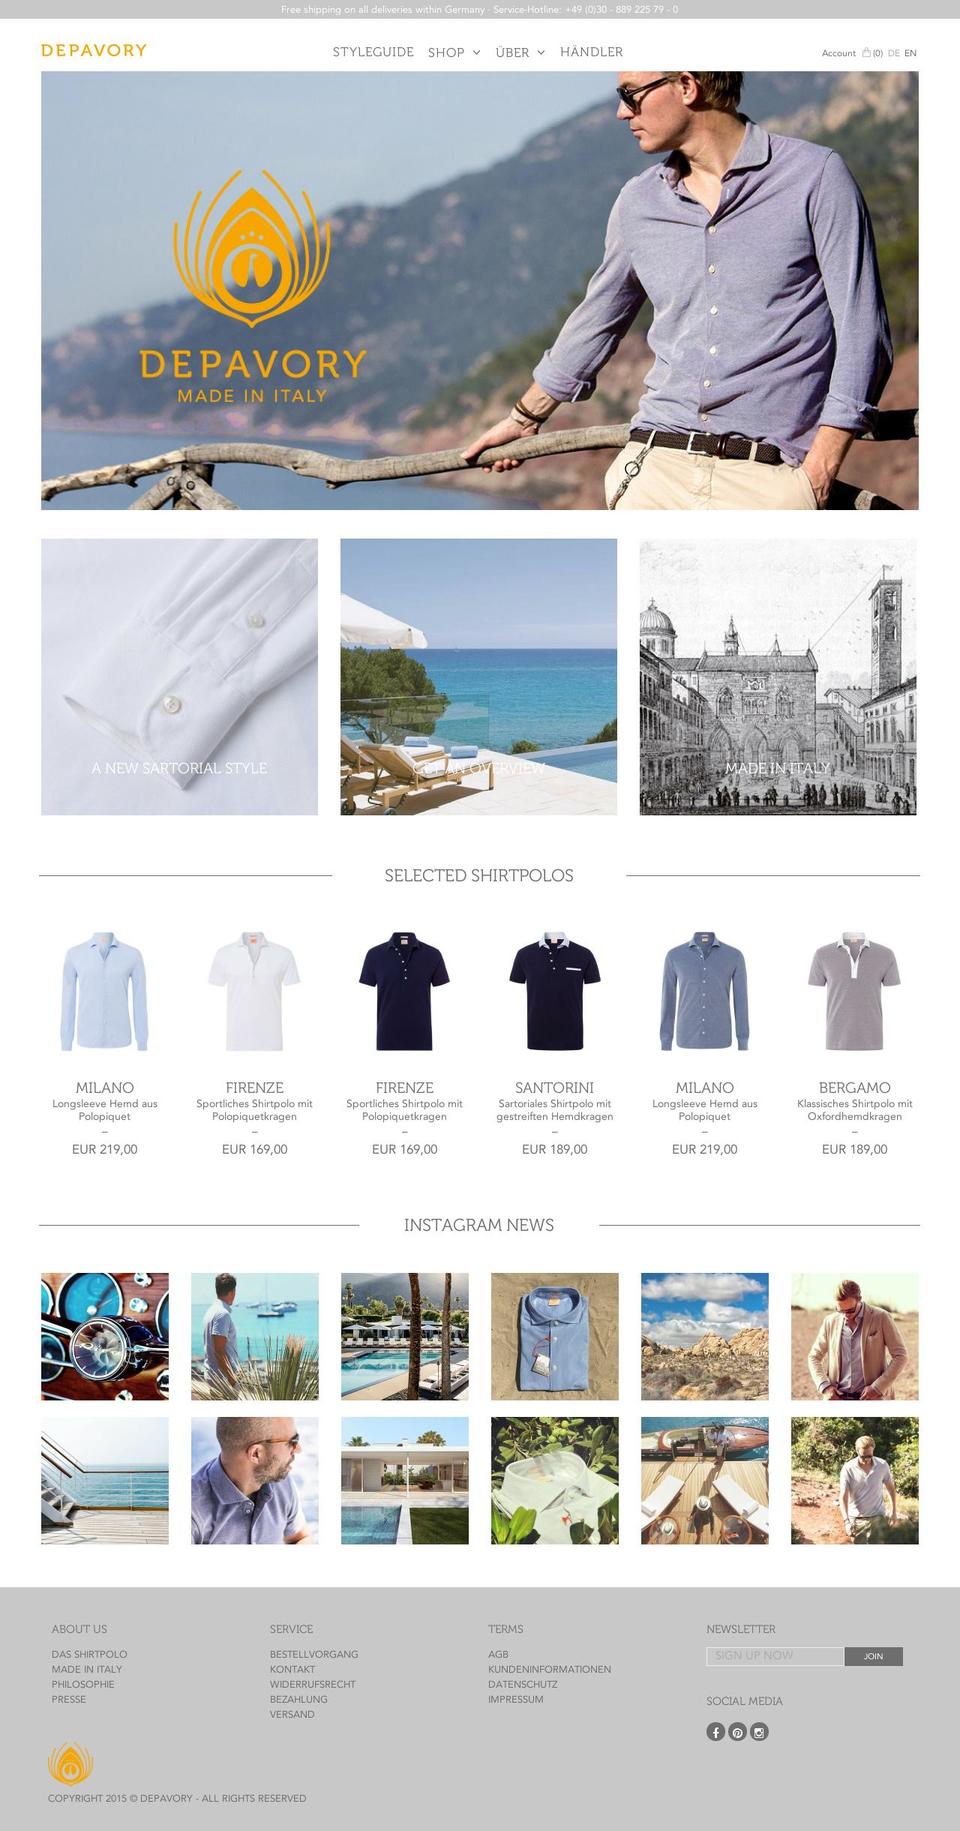 shirtpolo.eu shopify website screenshot